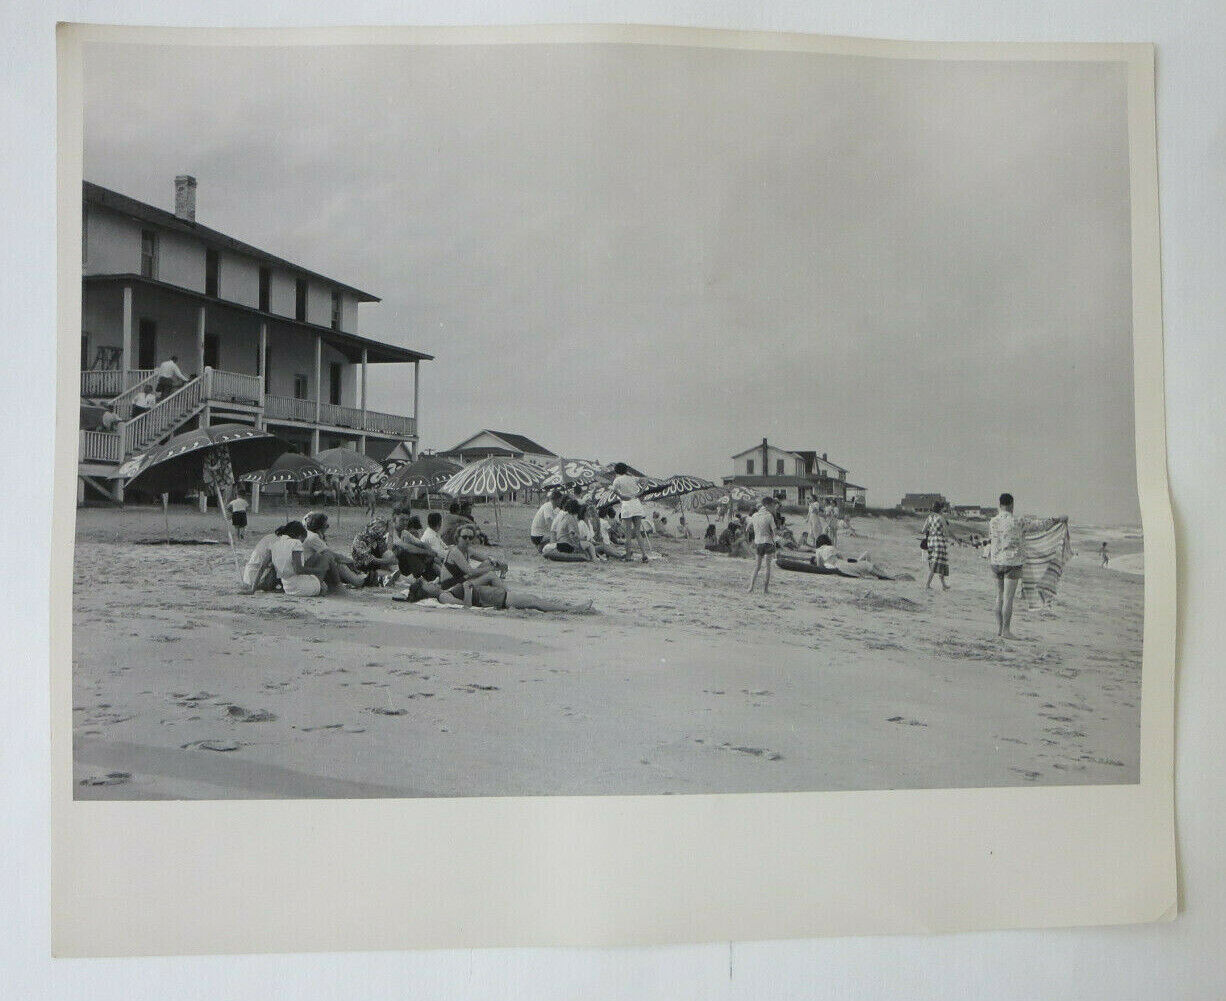 1948 Press 8 x 10 Photo Carolina Beach North Carolina People on Beach - Freeship